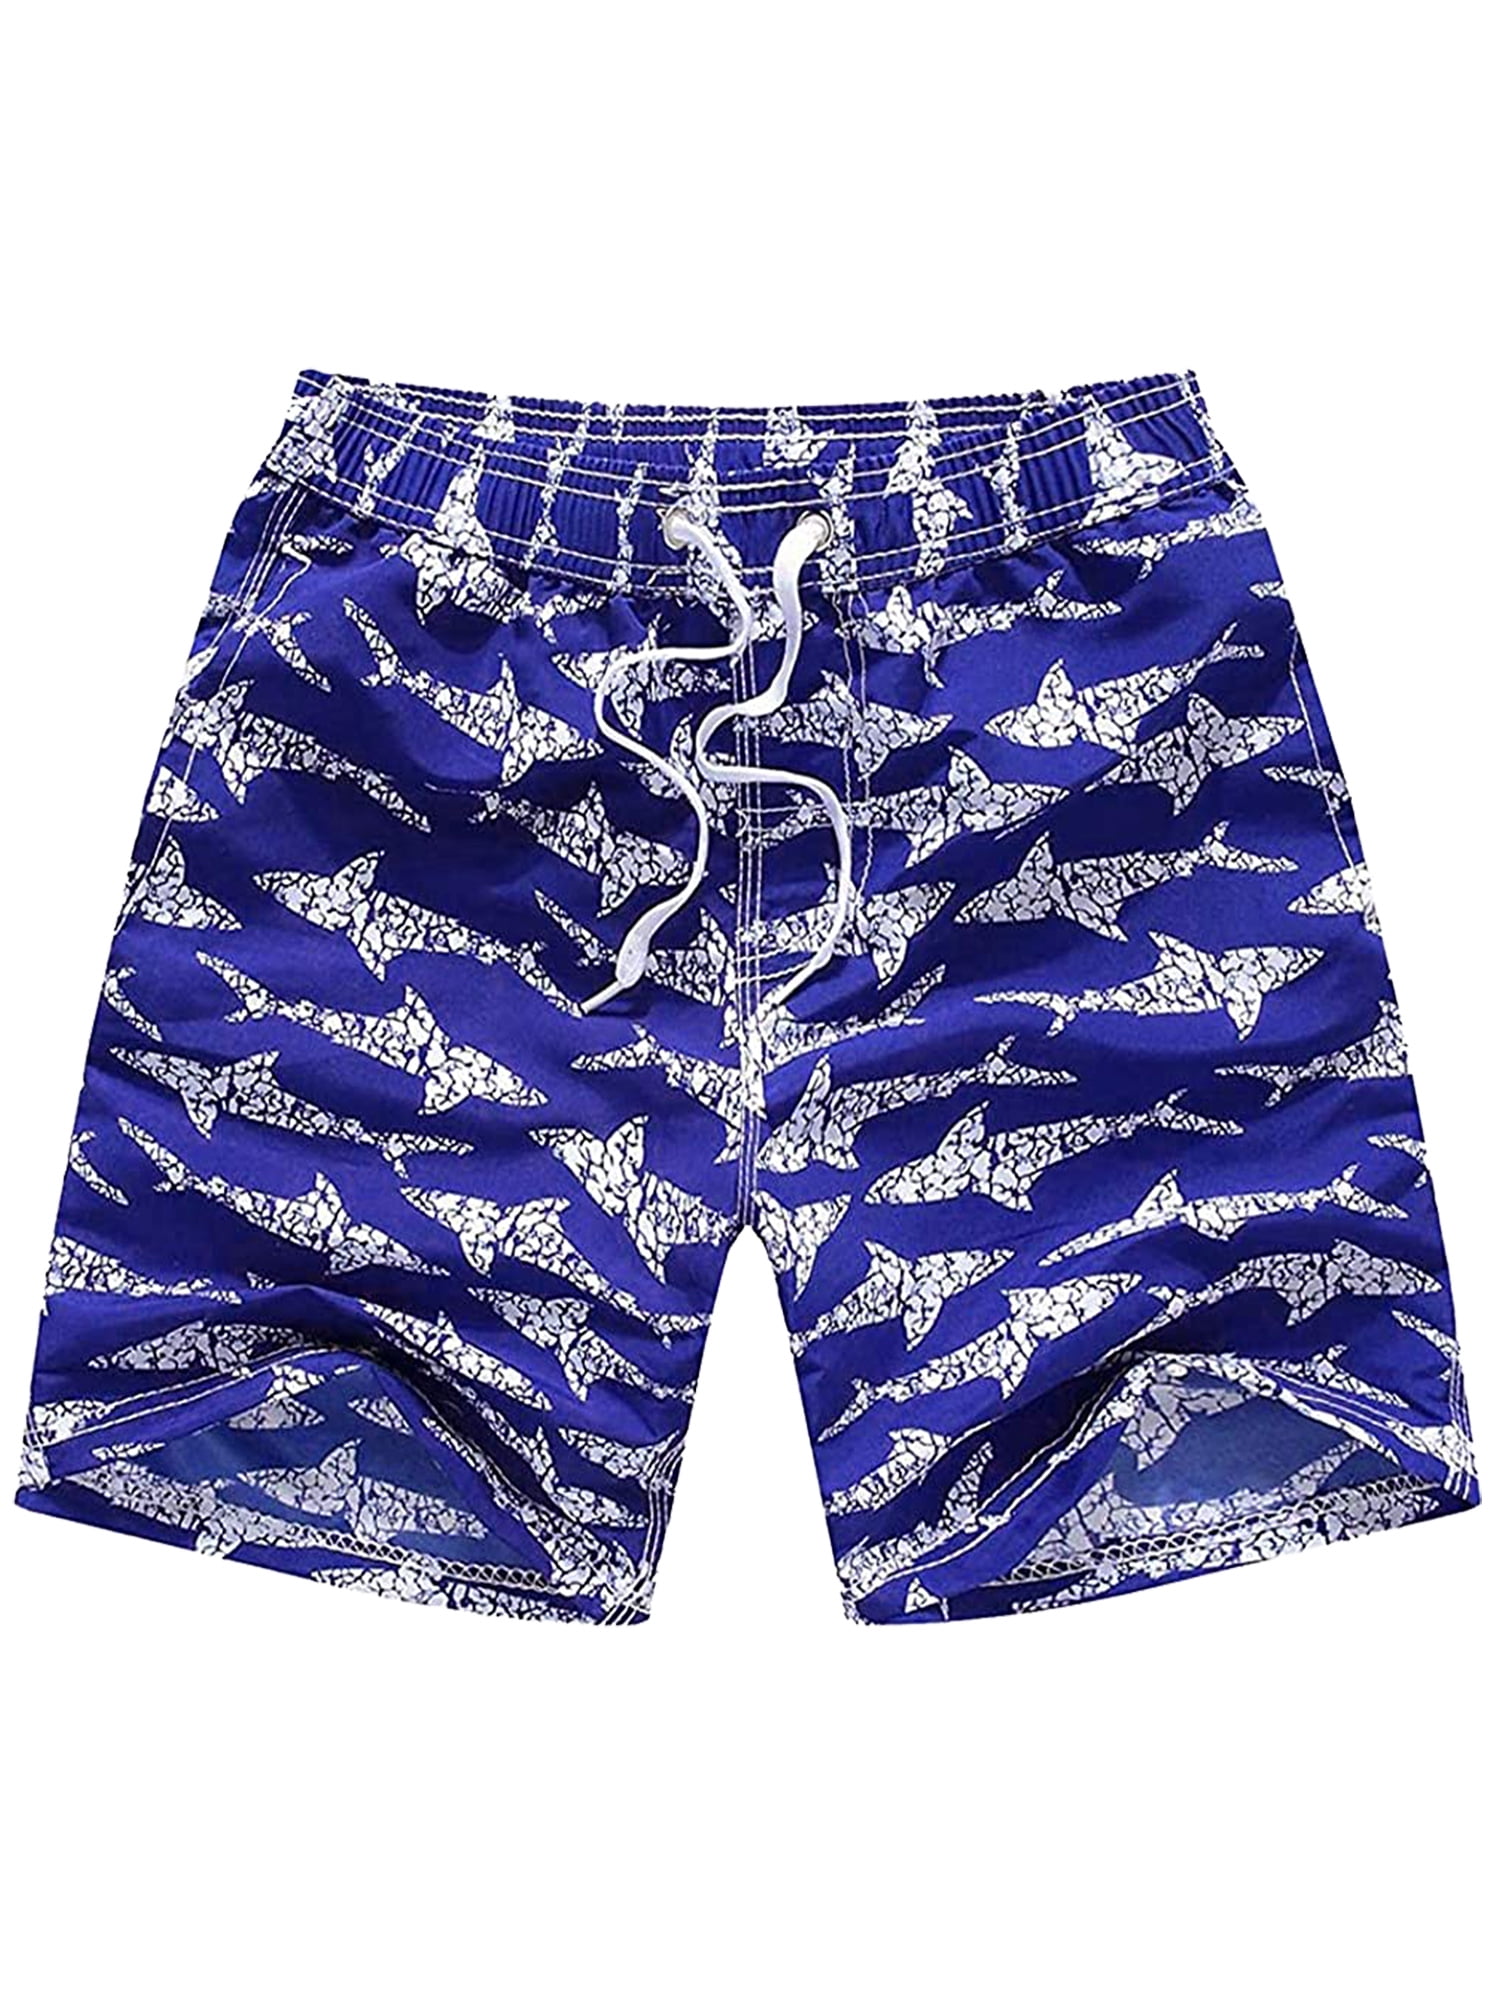 Little Hand Boys Swim Trunks,Quick Dry Beach Swim Shorts Swimwear with Pocket 13-14 Years